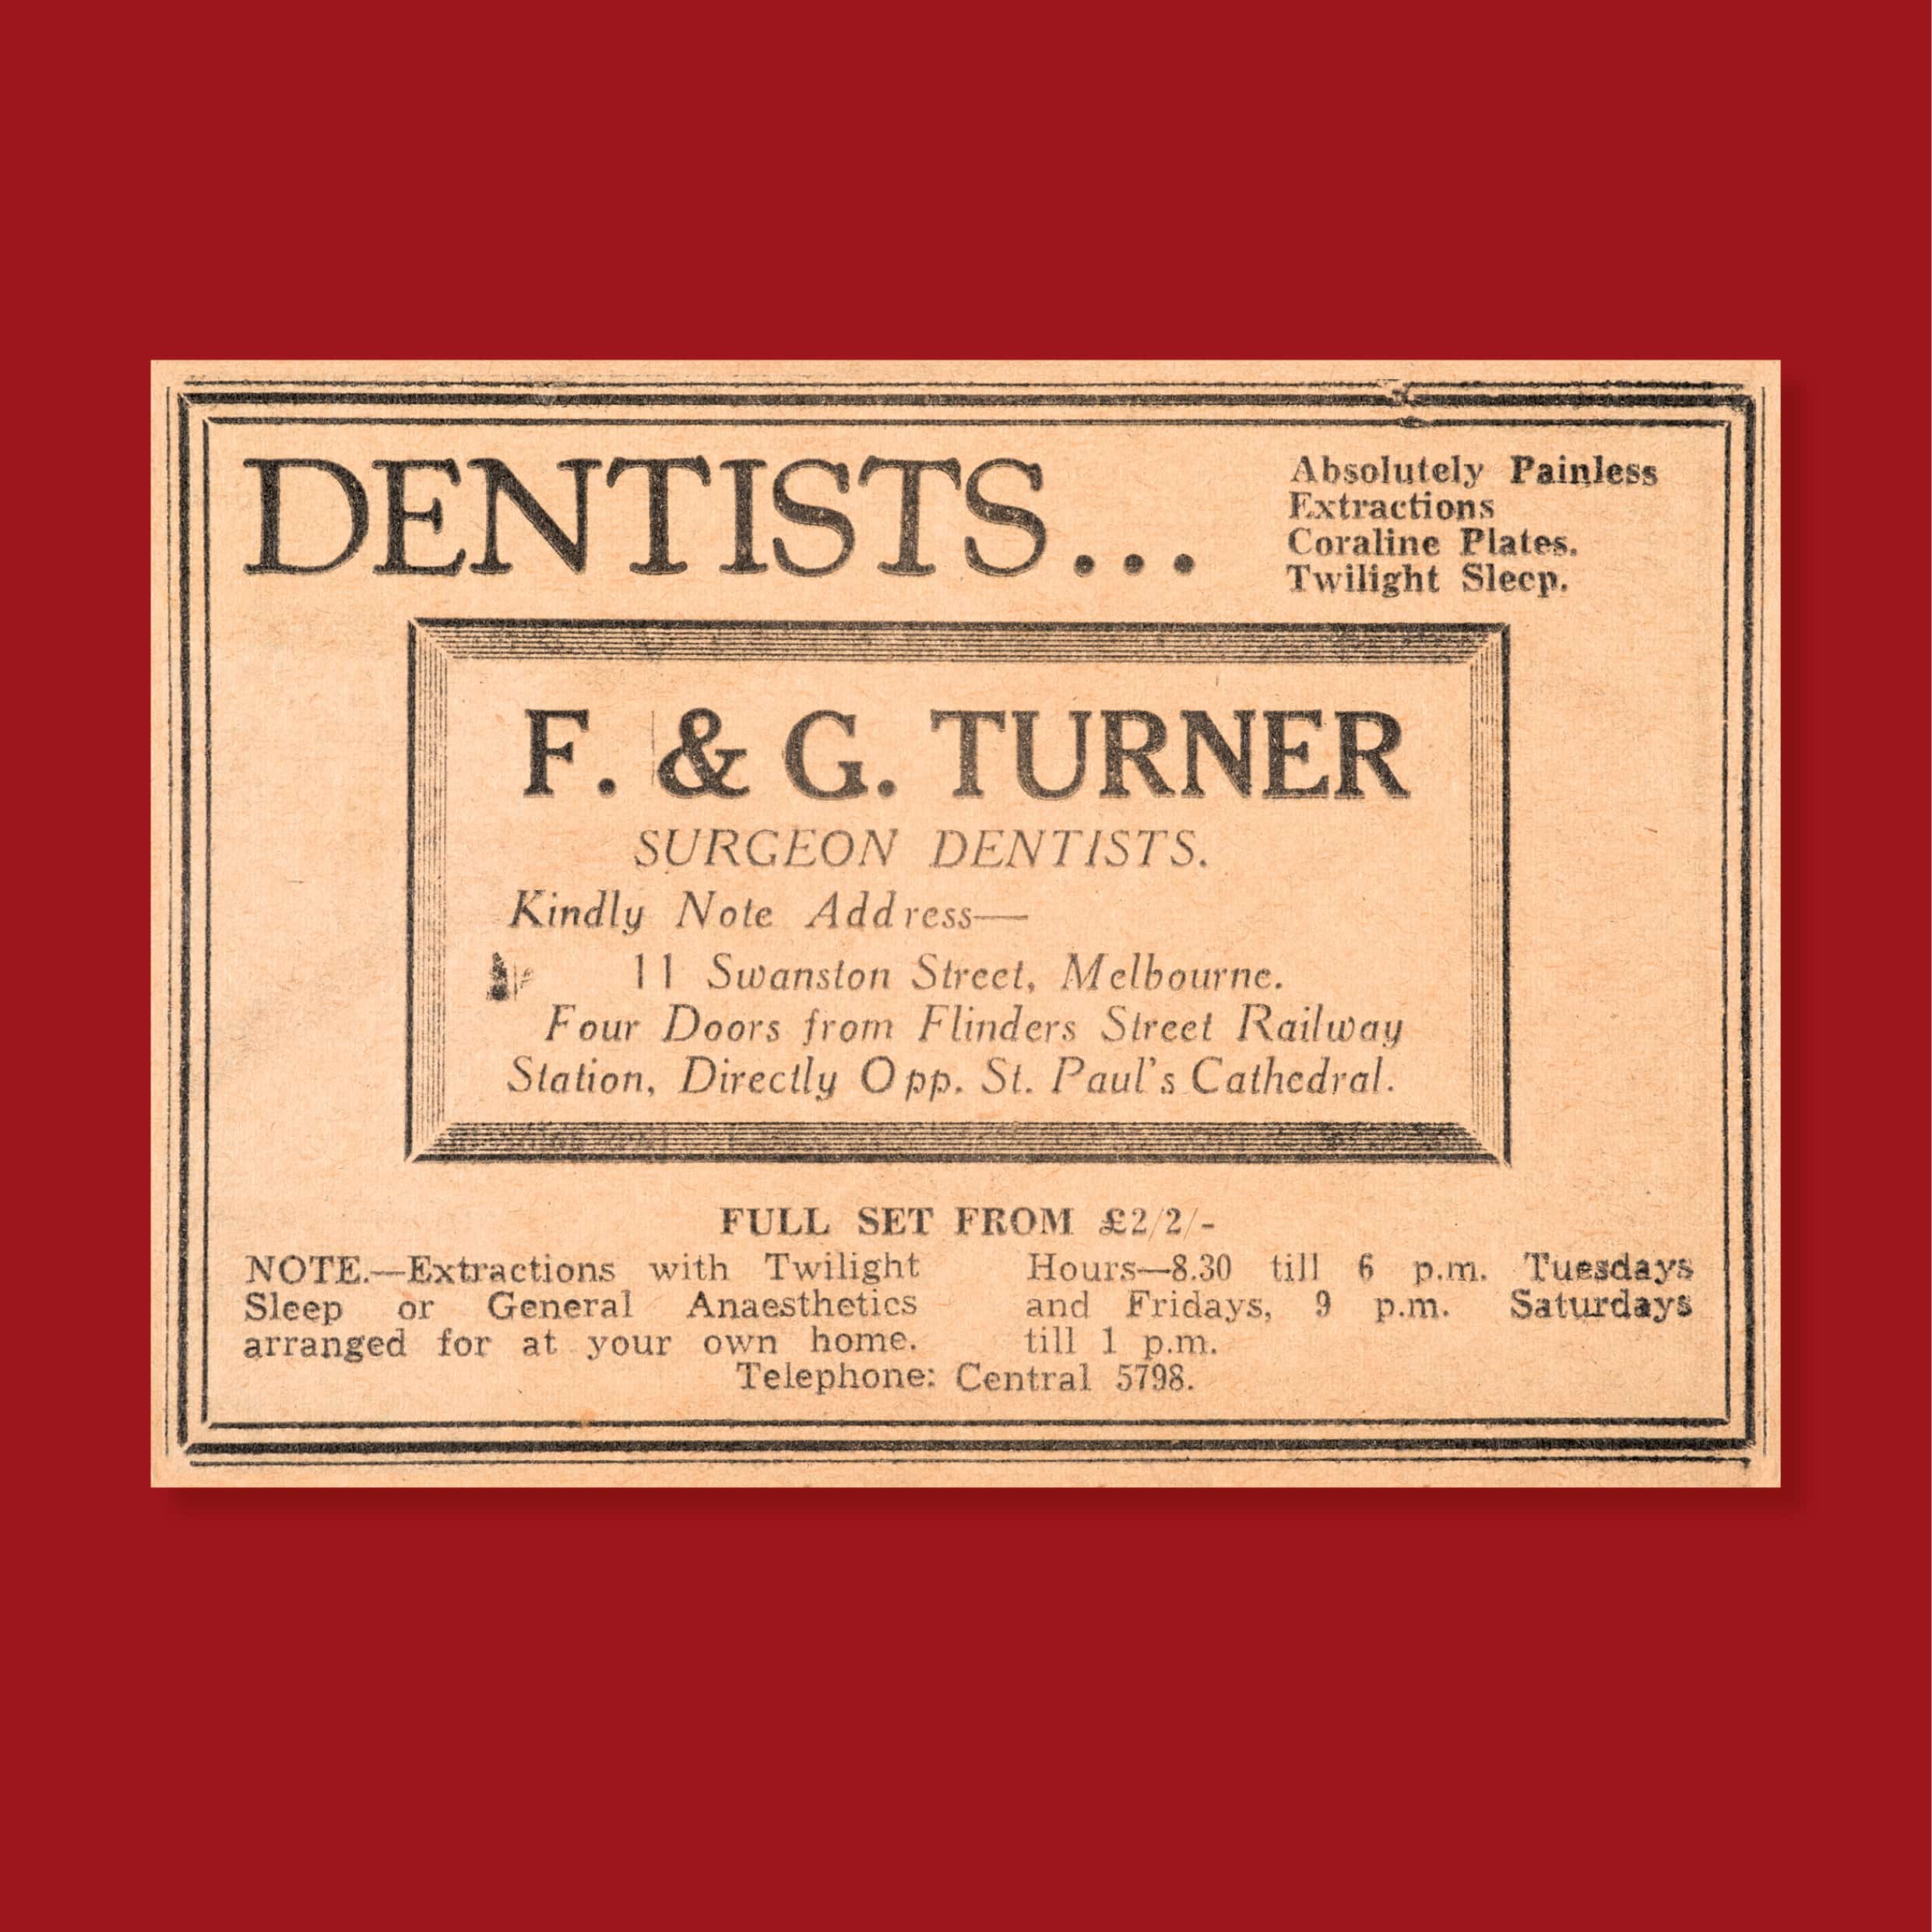 Advertisement for F. & G. Turner, Melbourne, 1932, published in The Herald (Melbourne), 3 July 1932, newspaper cutting, 17.0 × 25.0 cm. HFADM 1234.22, Henry Forman Atkinson Dental Museum, University of Melbourne. 